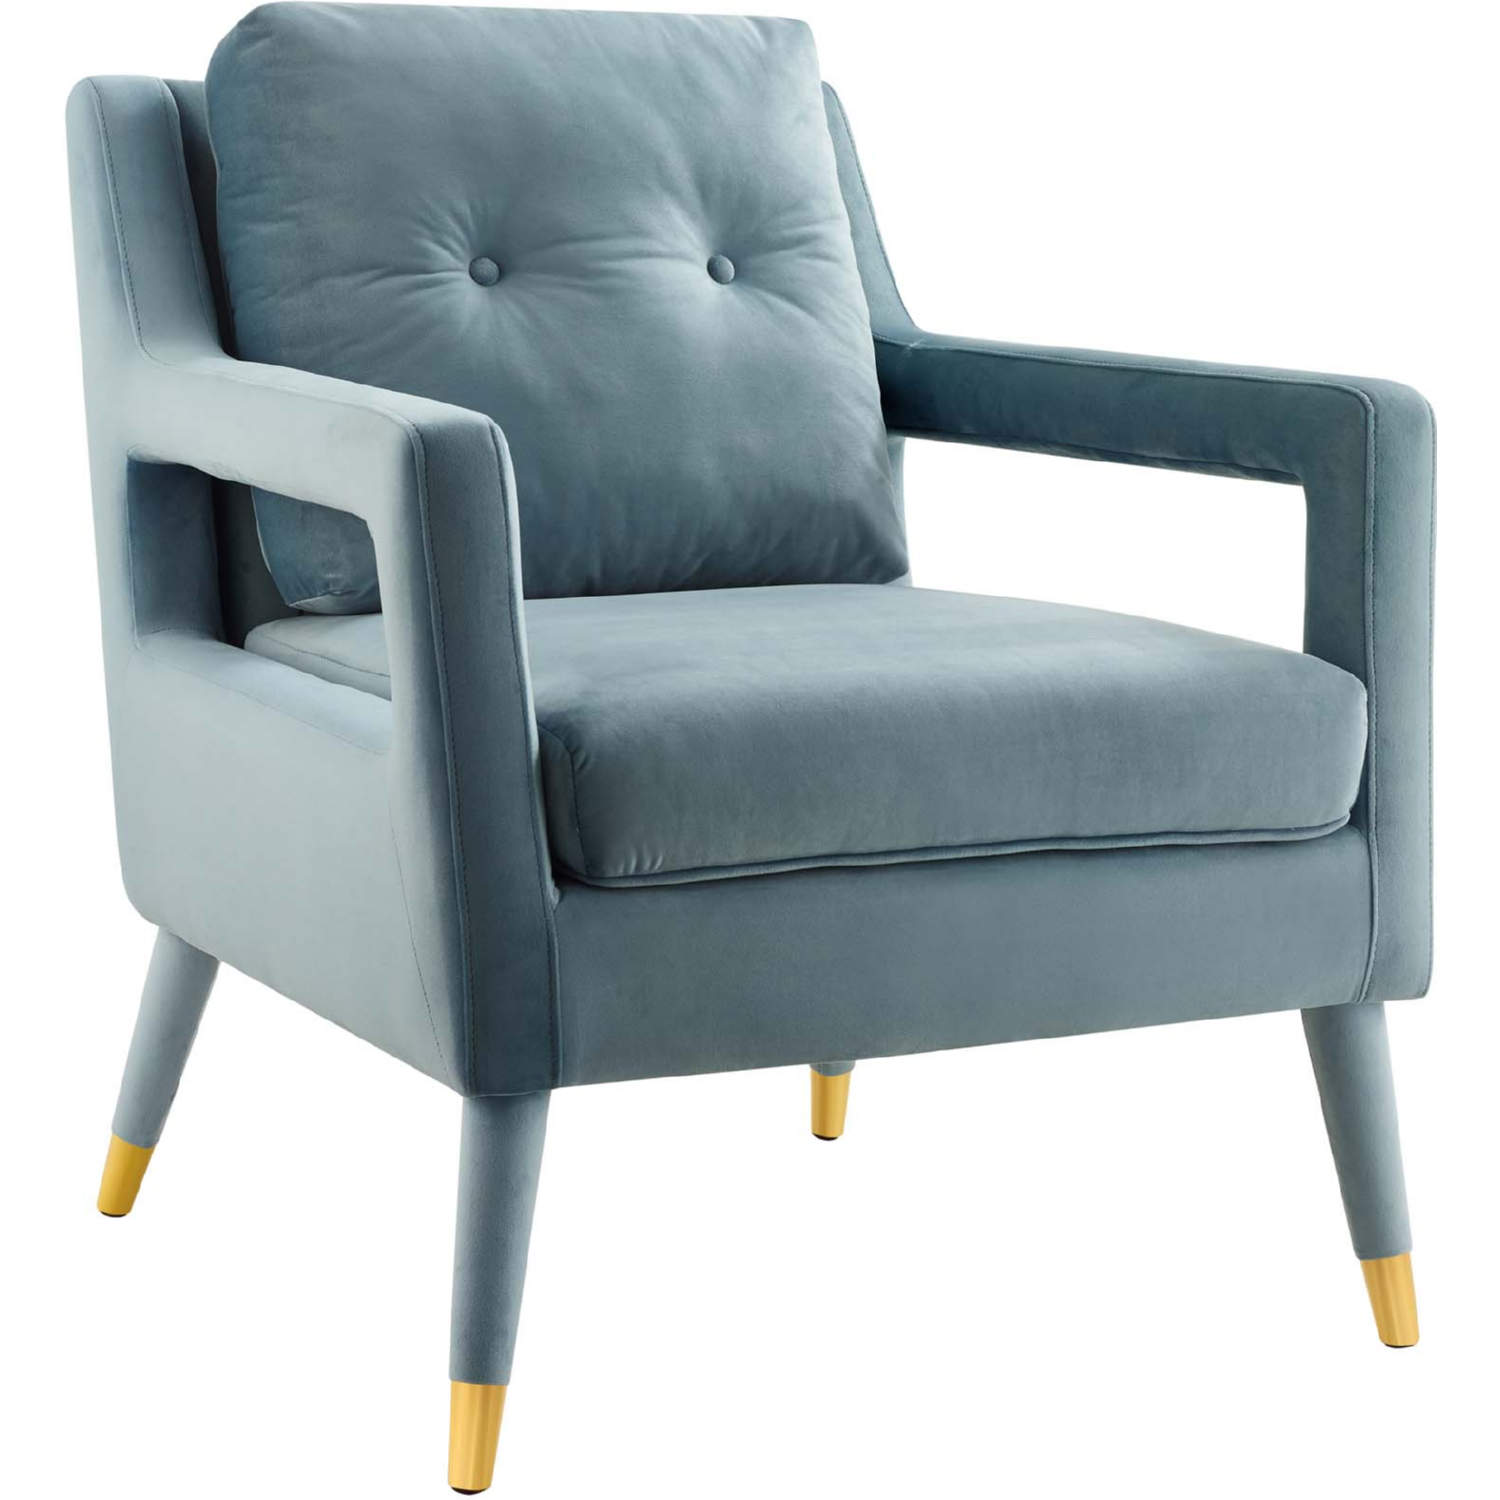 Modway Eei 3457 Lbu Premise Arm Chair, Light Blue Leather Accent Chair